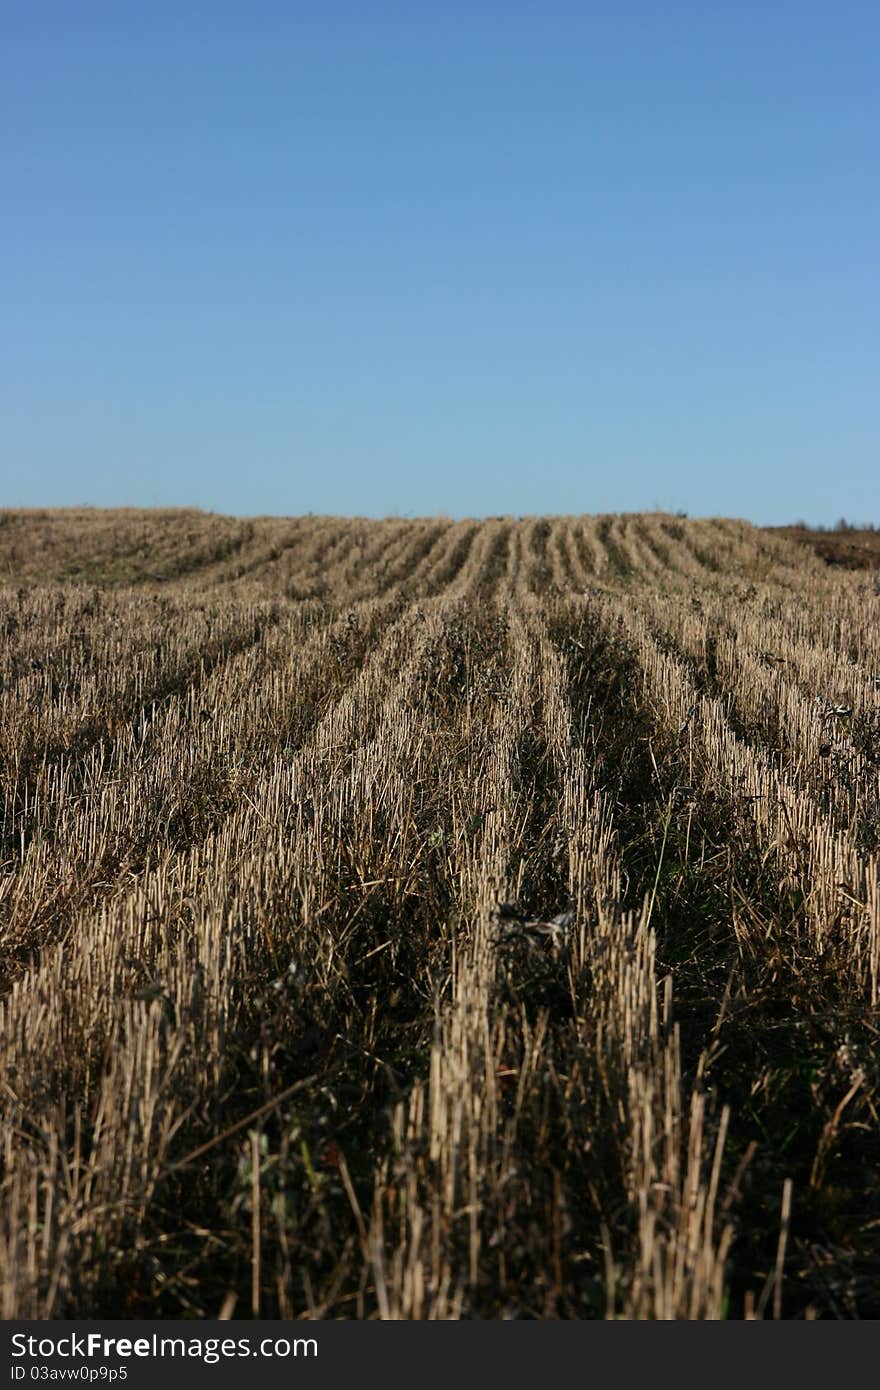 Rows of straws in stubble field. Rows of straws in stubble field